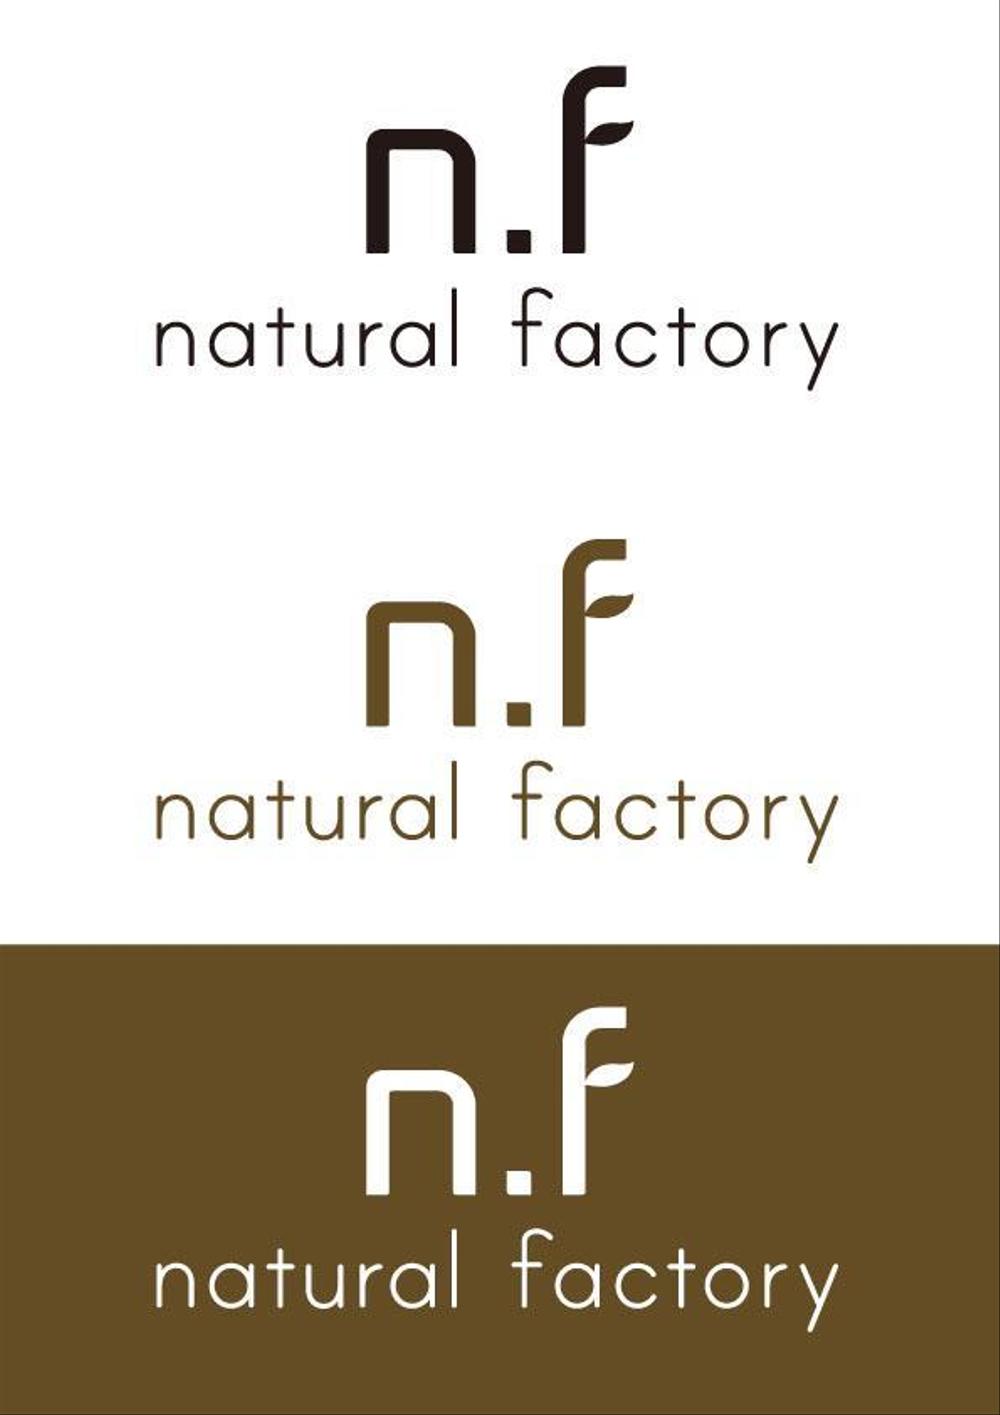 natural factory02.jpg